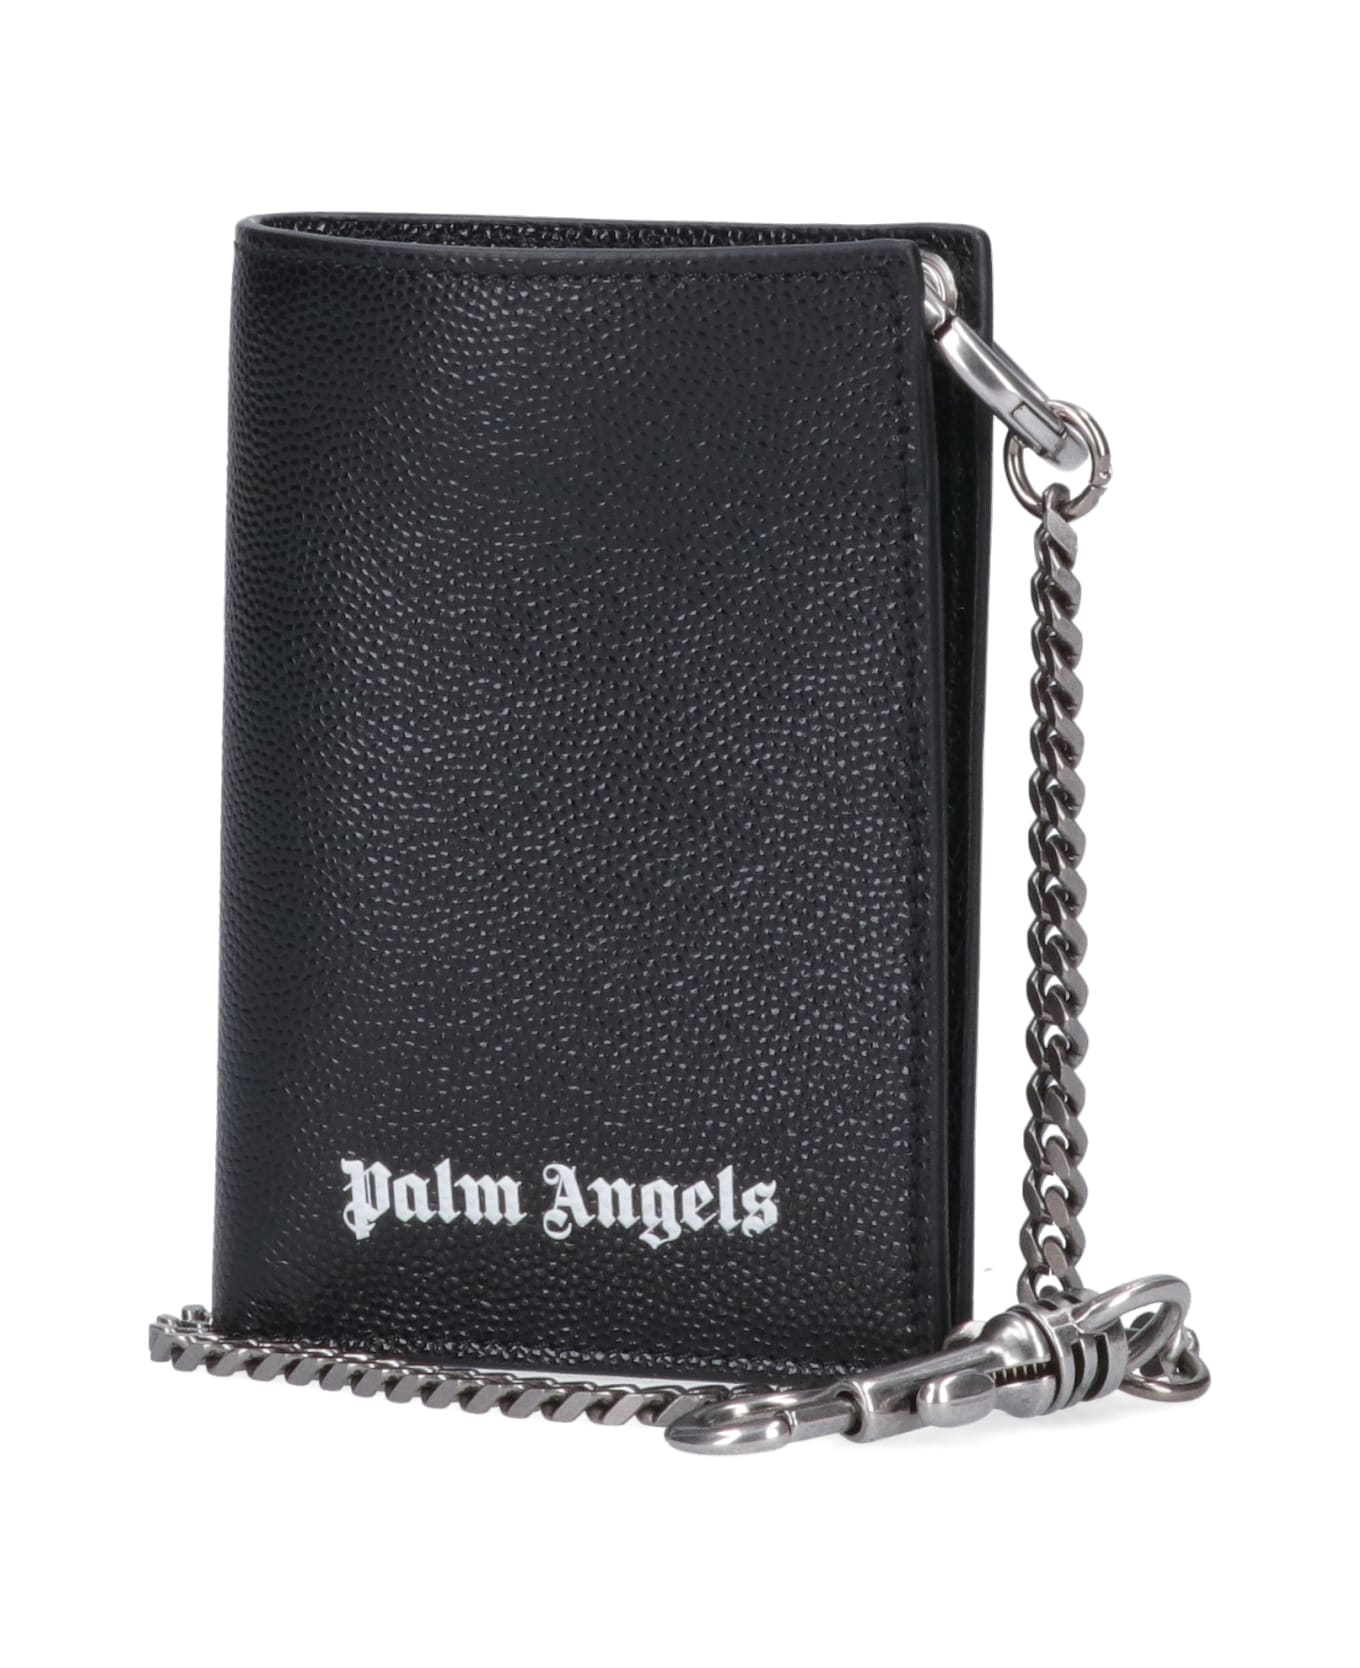 Palm Angels Wallet - Black